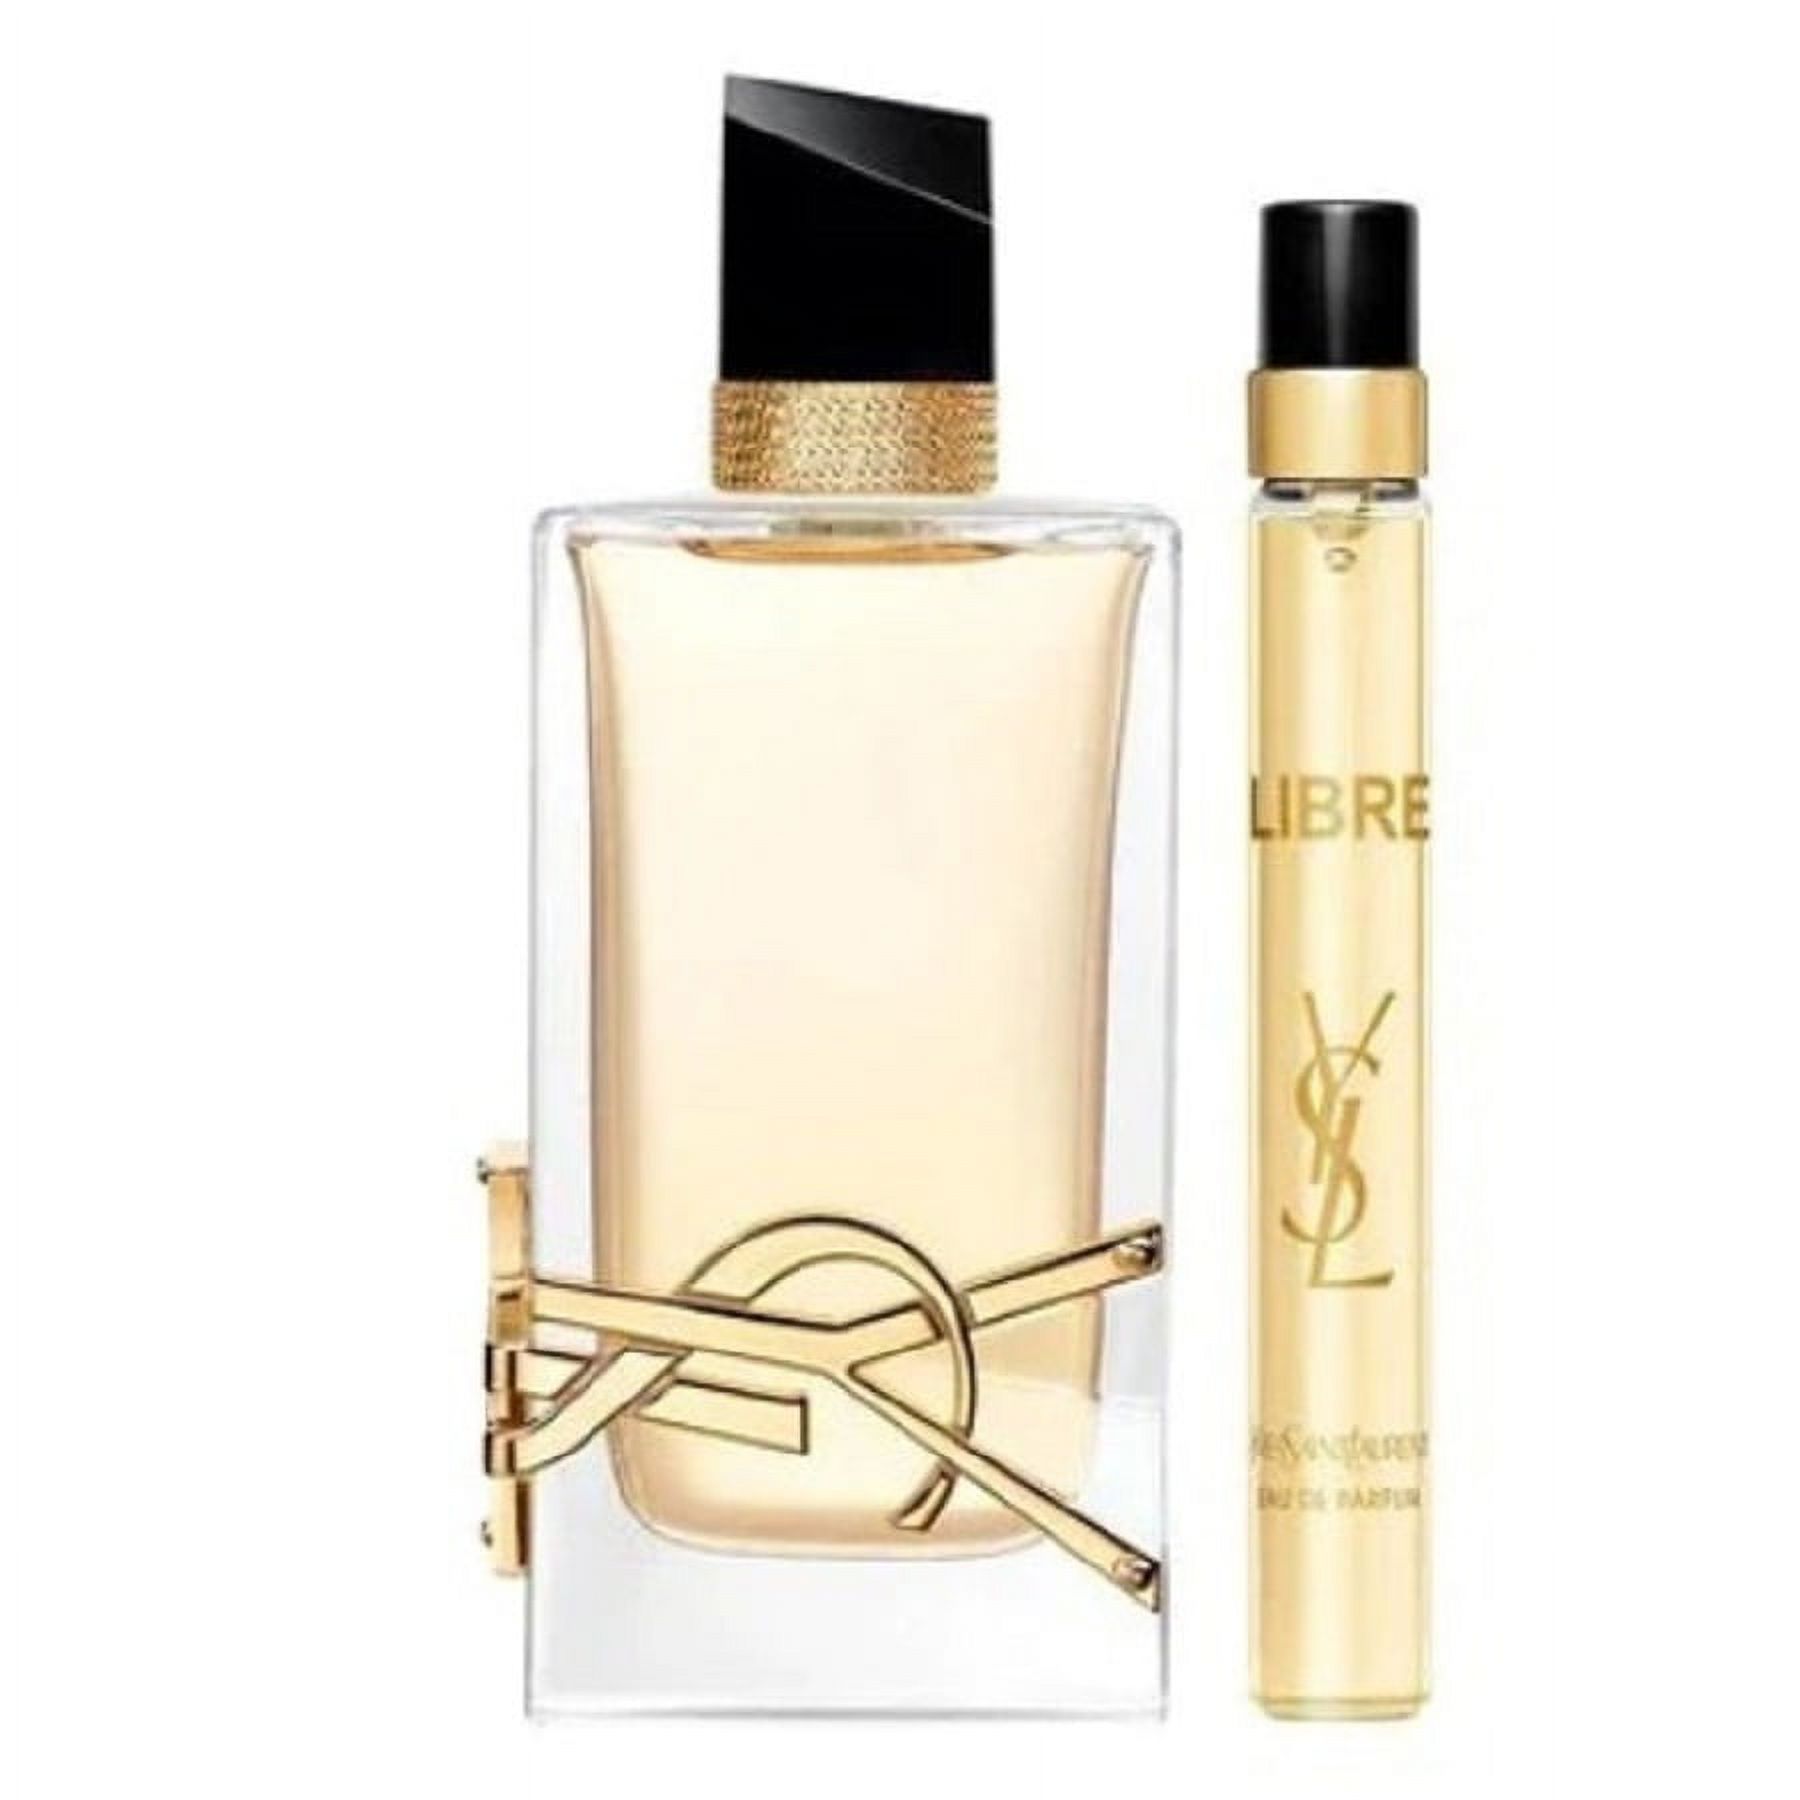 Yves Saint Laurent Ladies Libre Gift Set Fragrances 3660732593538 - image 1 of 2